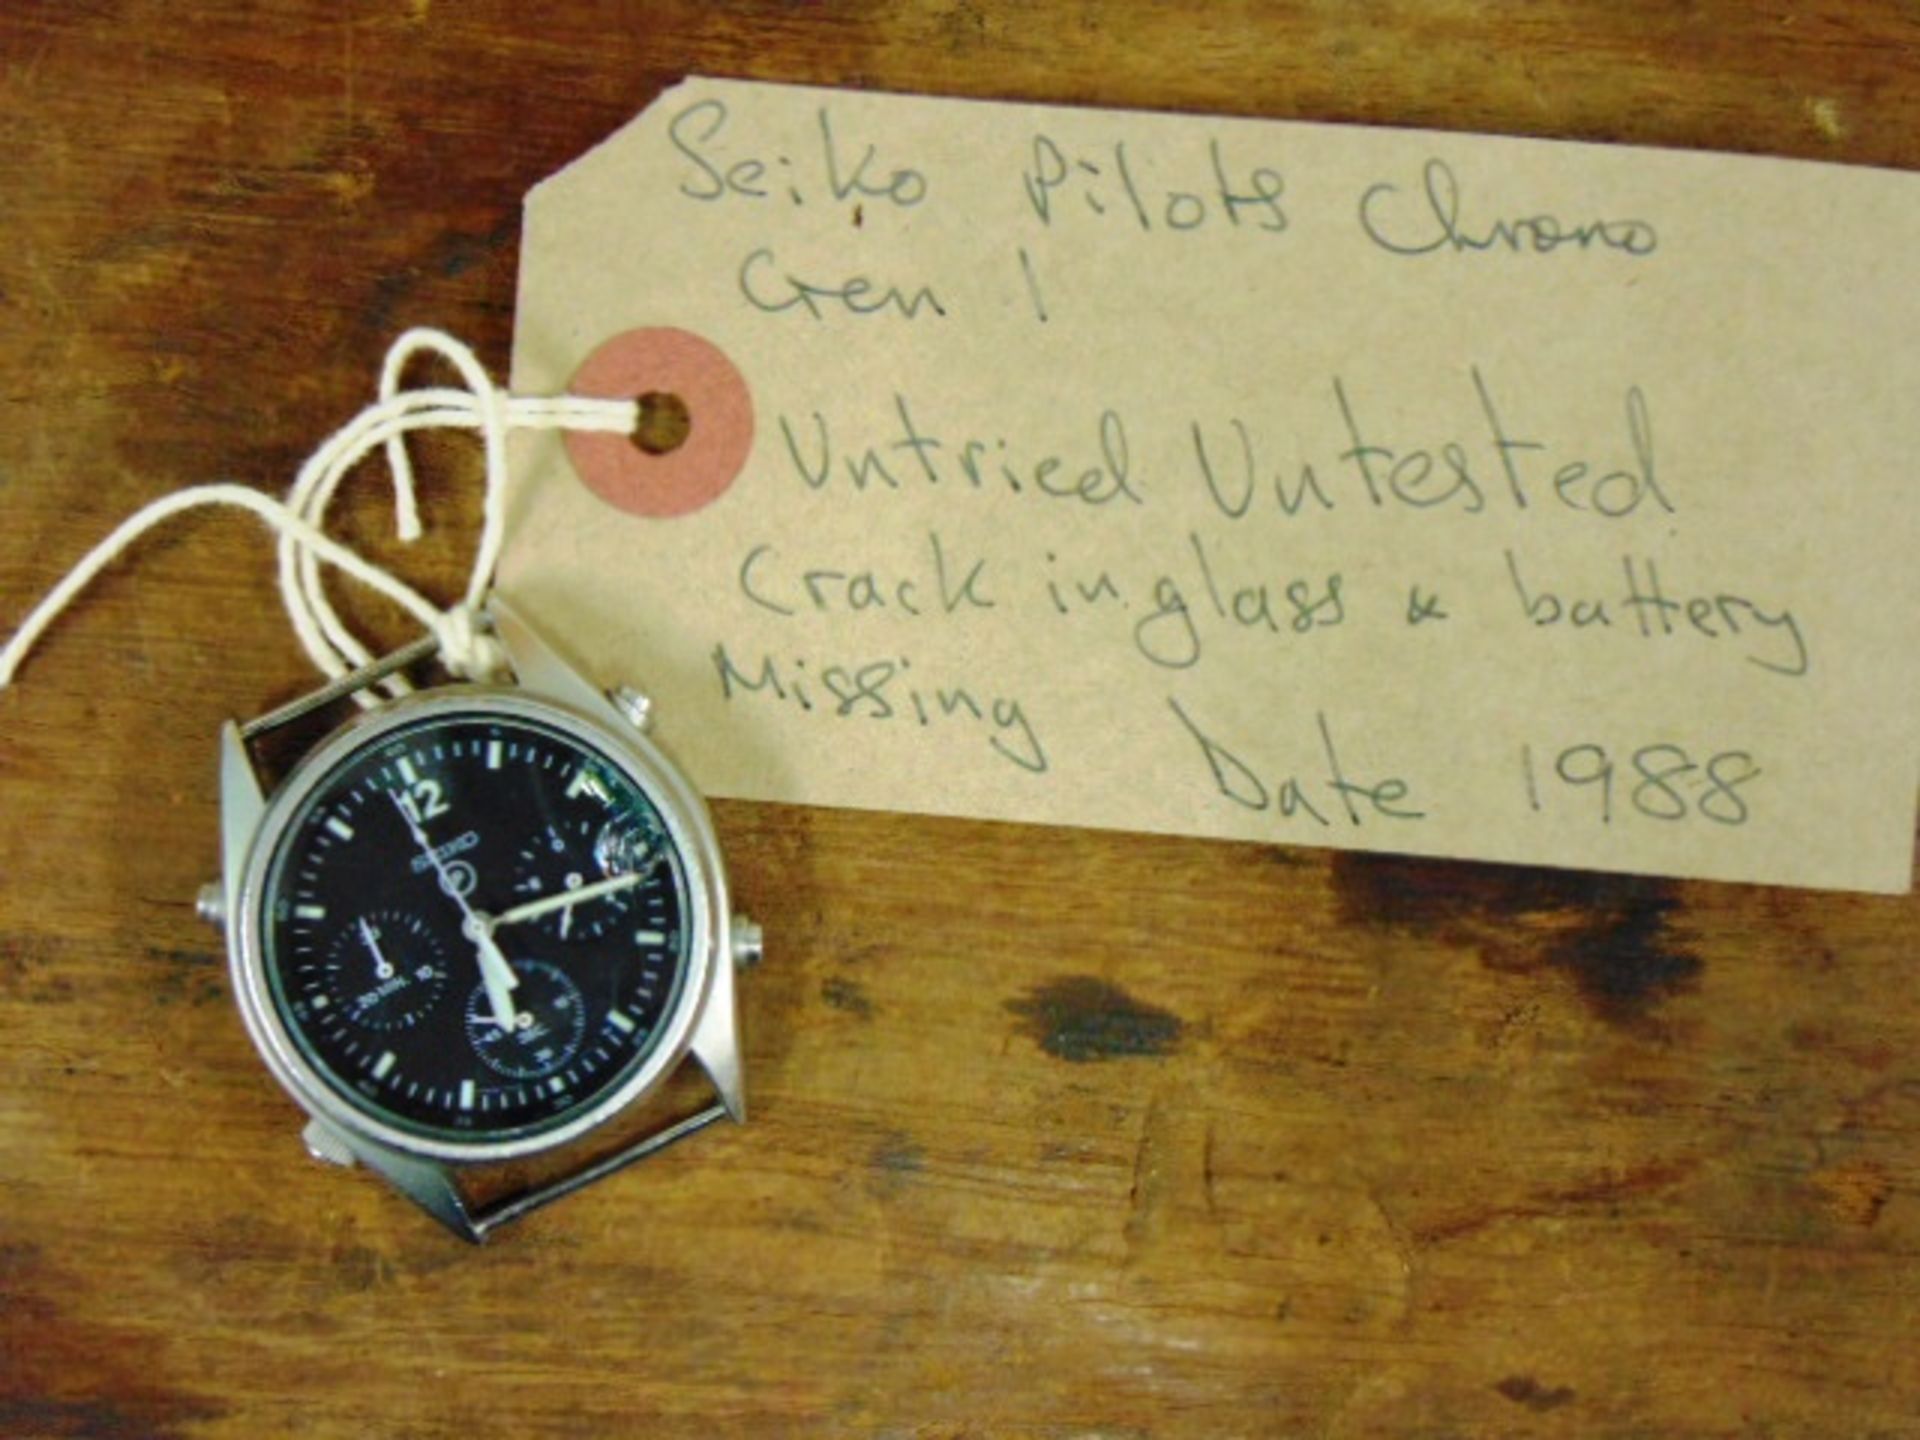 Seiko Pilots Chronograph generation 1 - Image 2 of 4